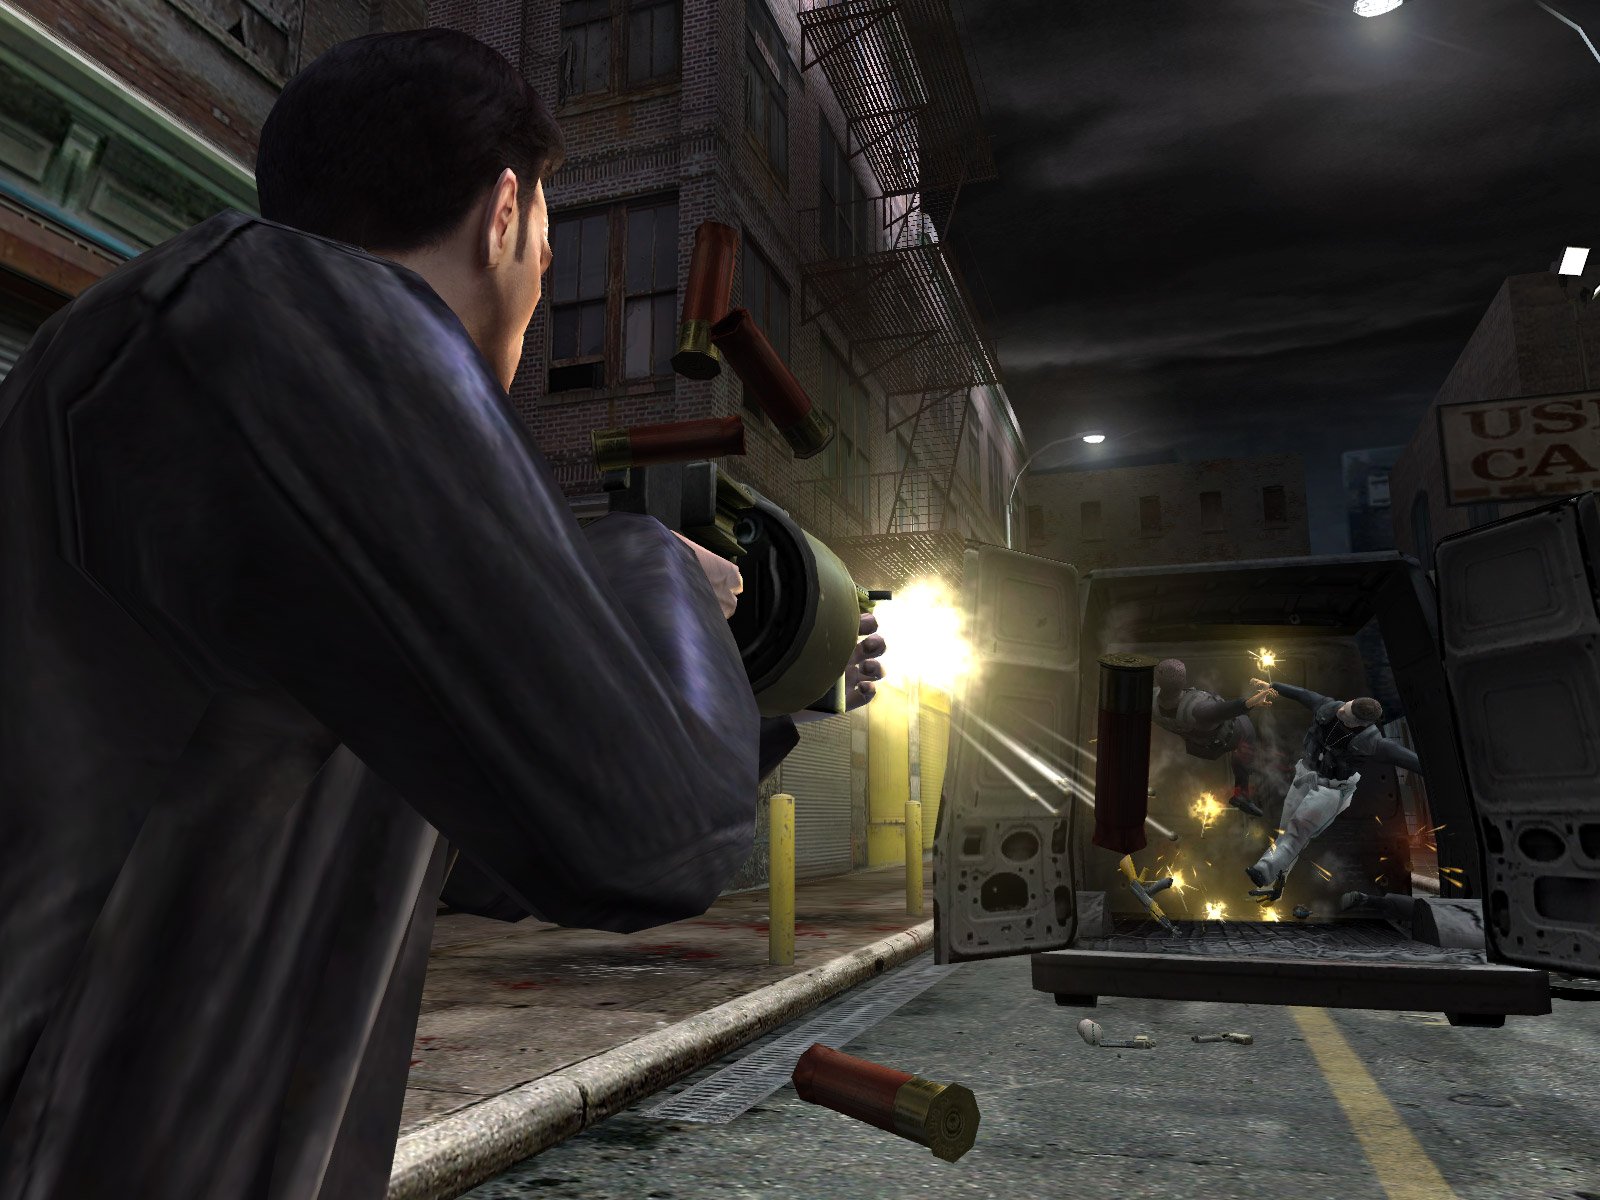 Second max. Max Payne 2. The Fall of Max Payne 2. Макс Пейн игра. Max Payne 2 e3 2003.